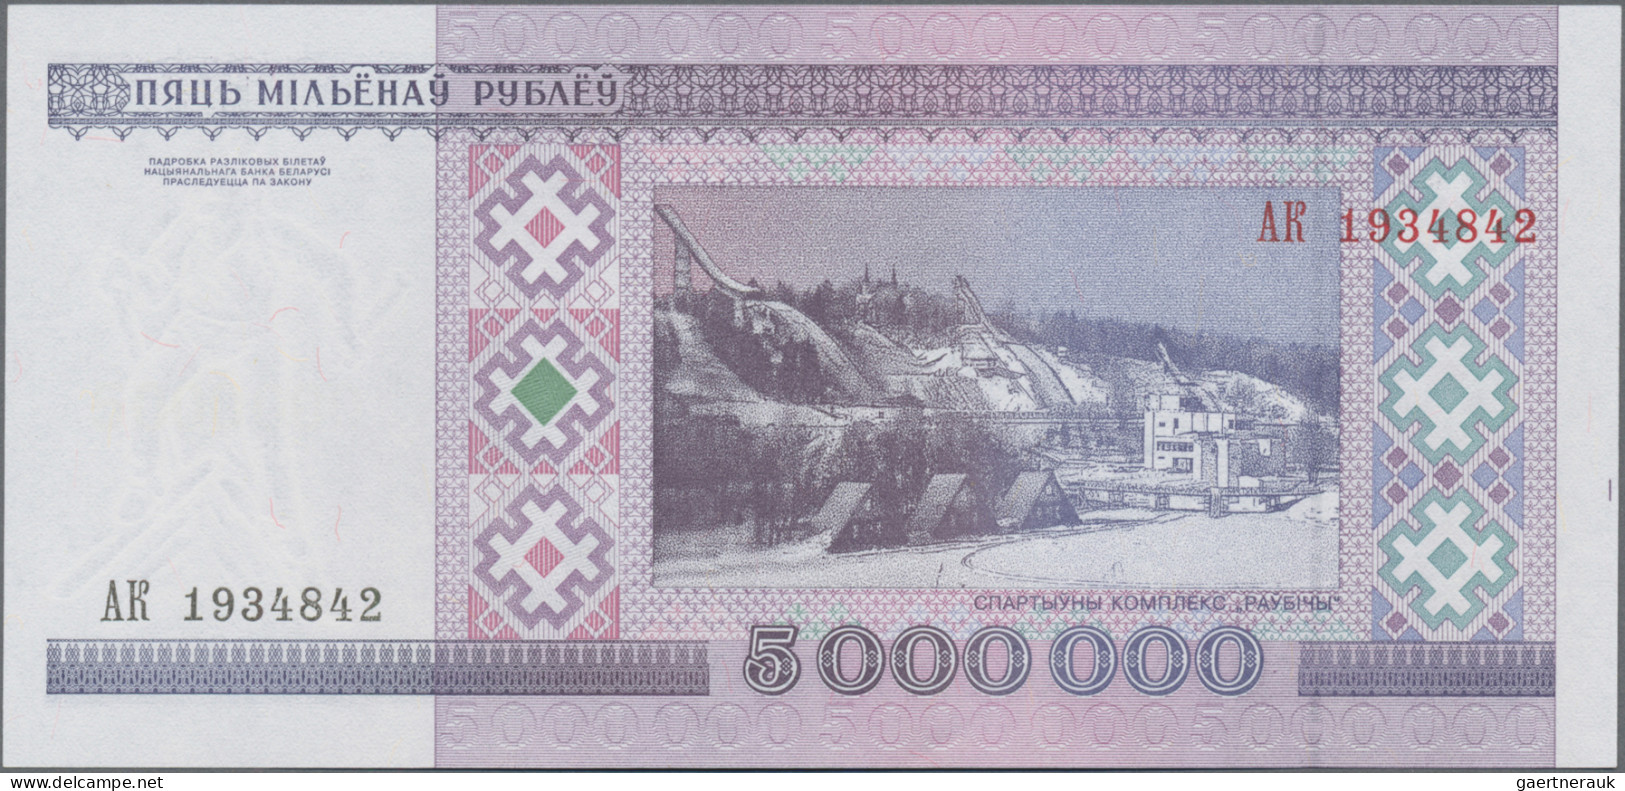 Belarus: National Bank Of Belarus, 5 Million Rubles 1999, P.20 In Perfect UNC Co - Belarus